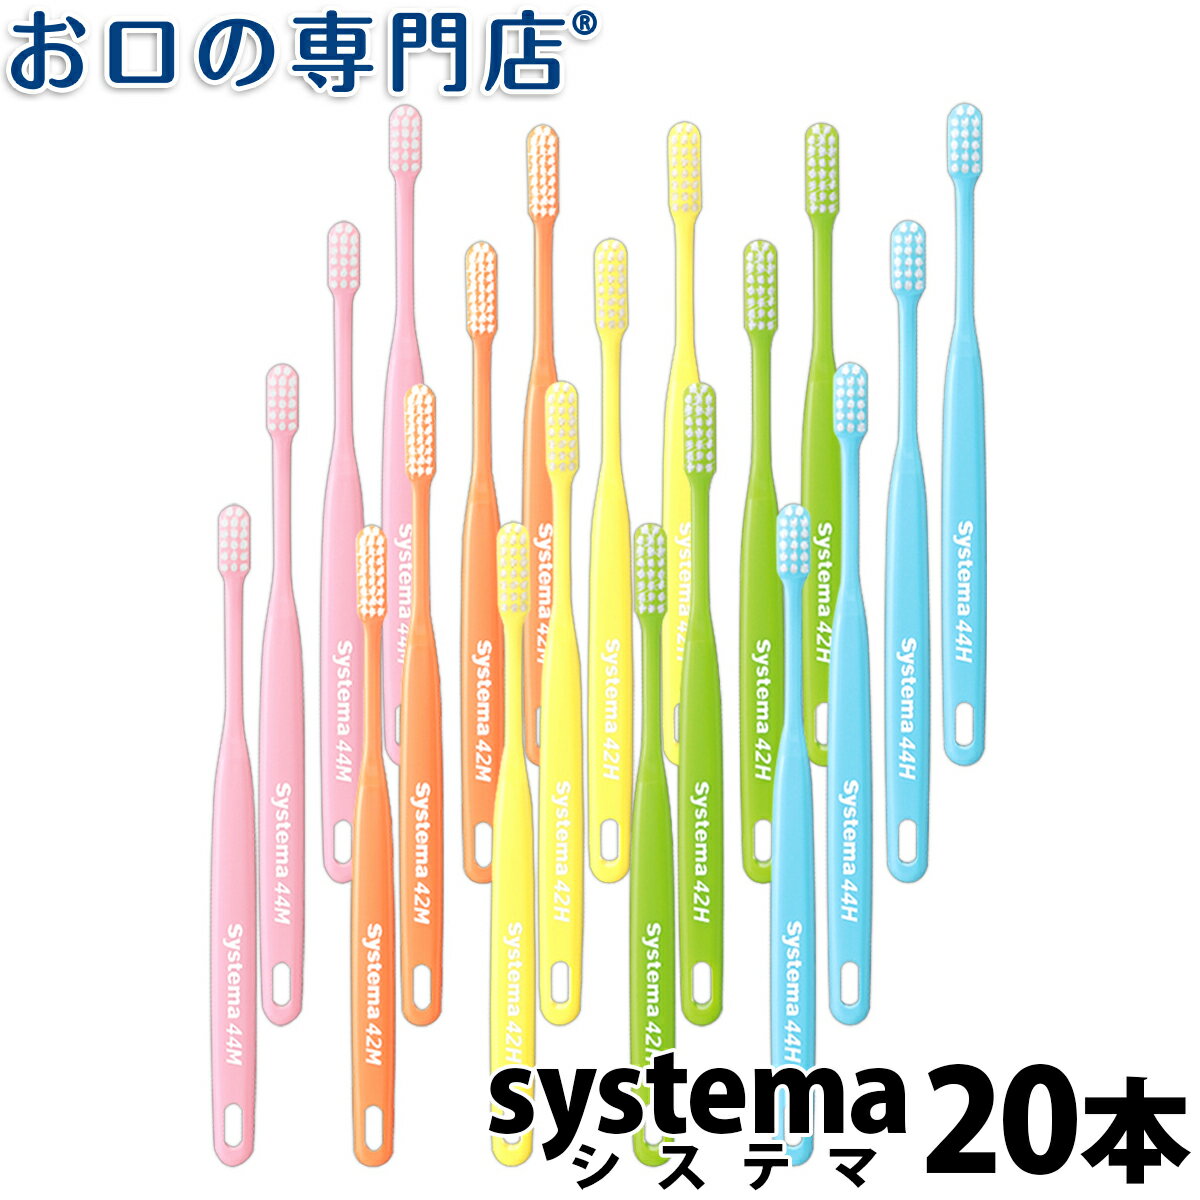 DENT. systema 歯ブラシ 20本 + 艶白 歯ブラシ 1本